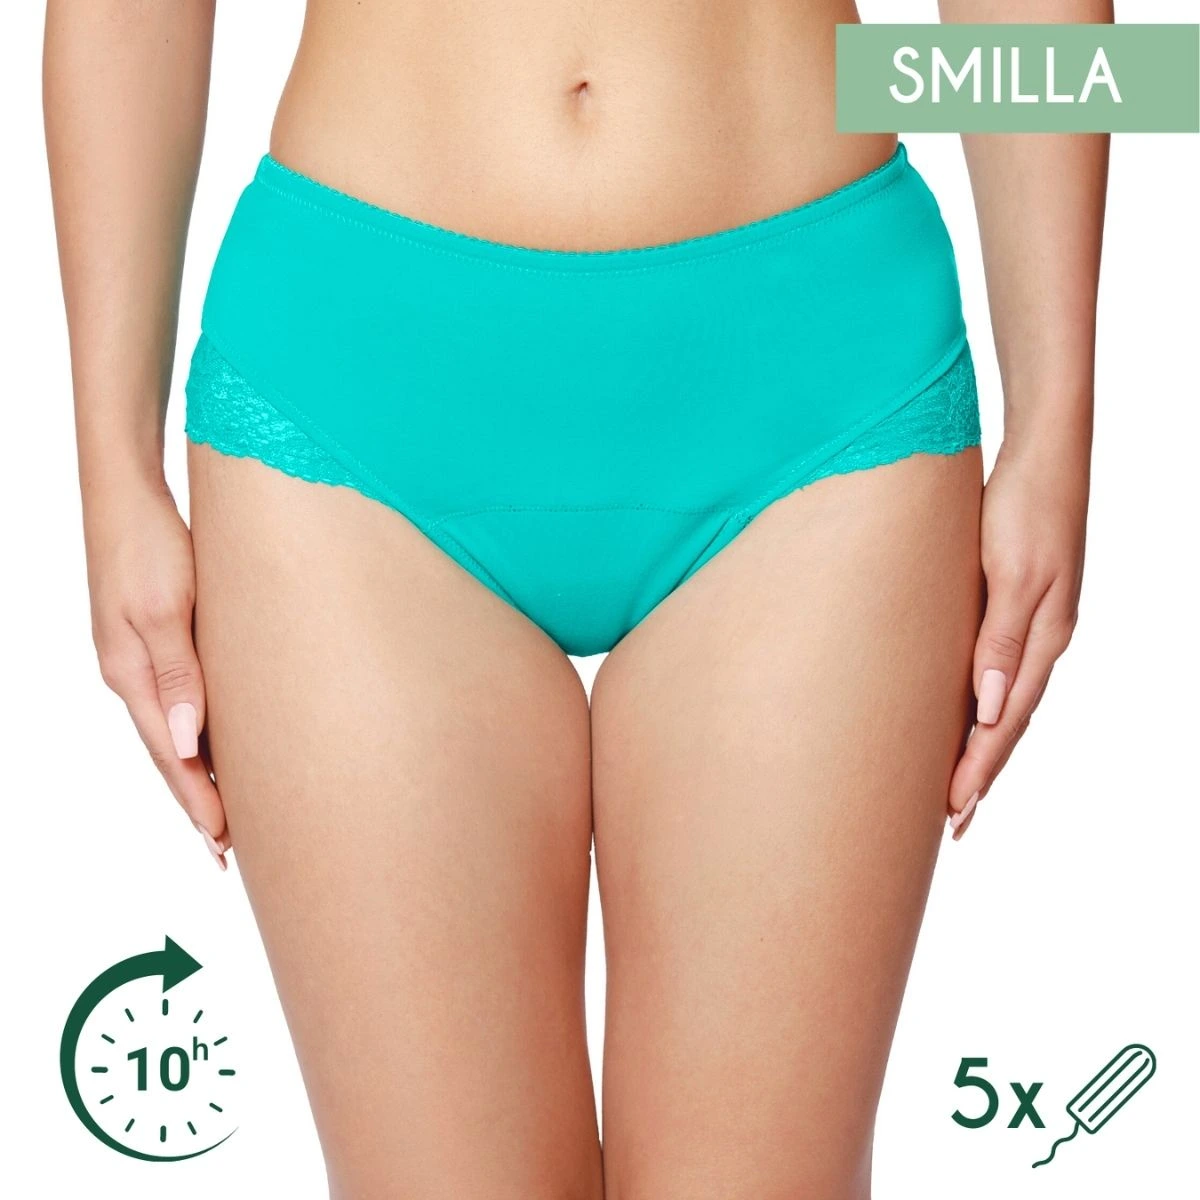 SMILLA menstrual panties - French cut - Green